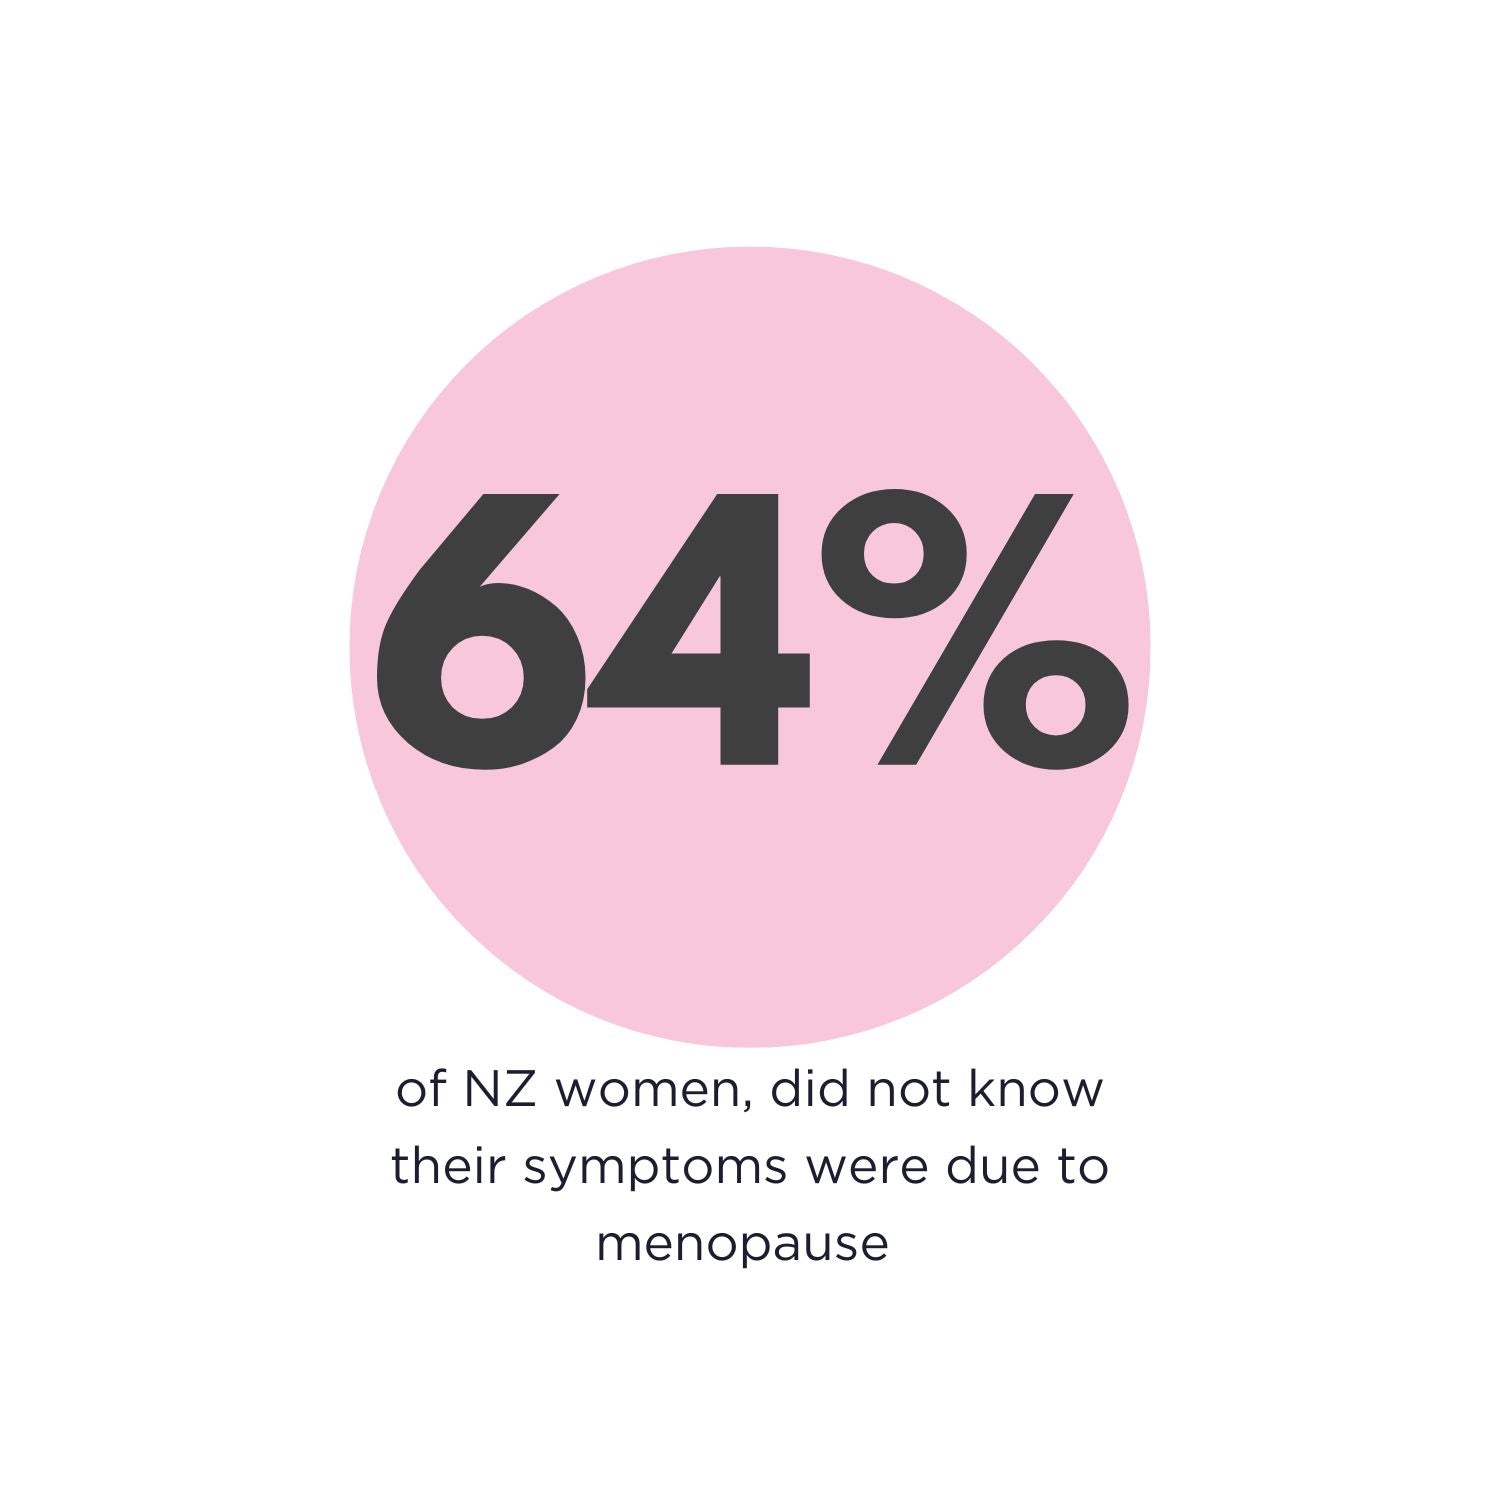 NZ Menodoctor Menopause survey statistic 